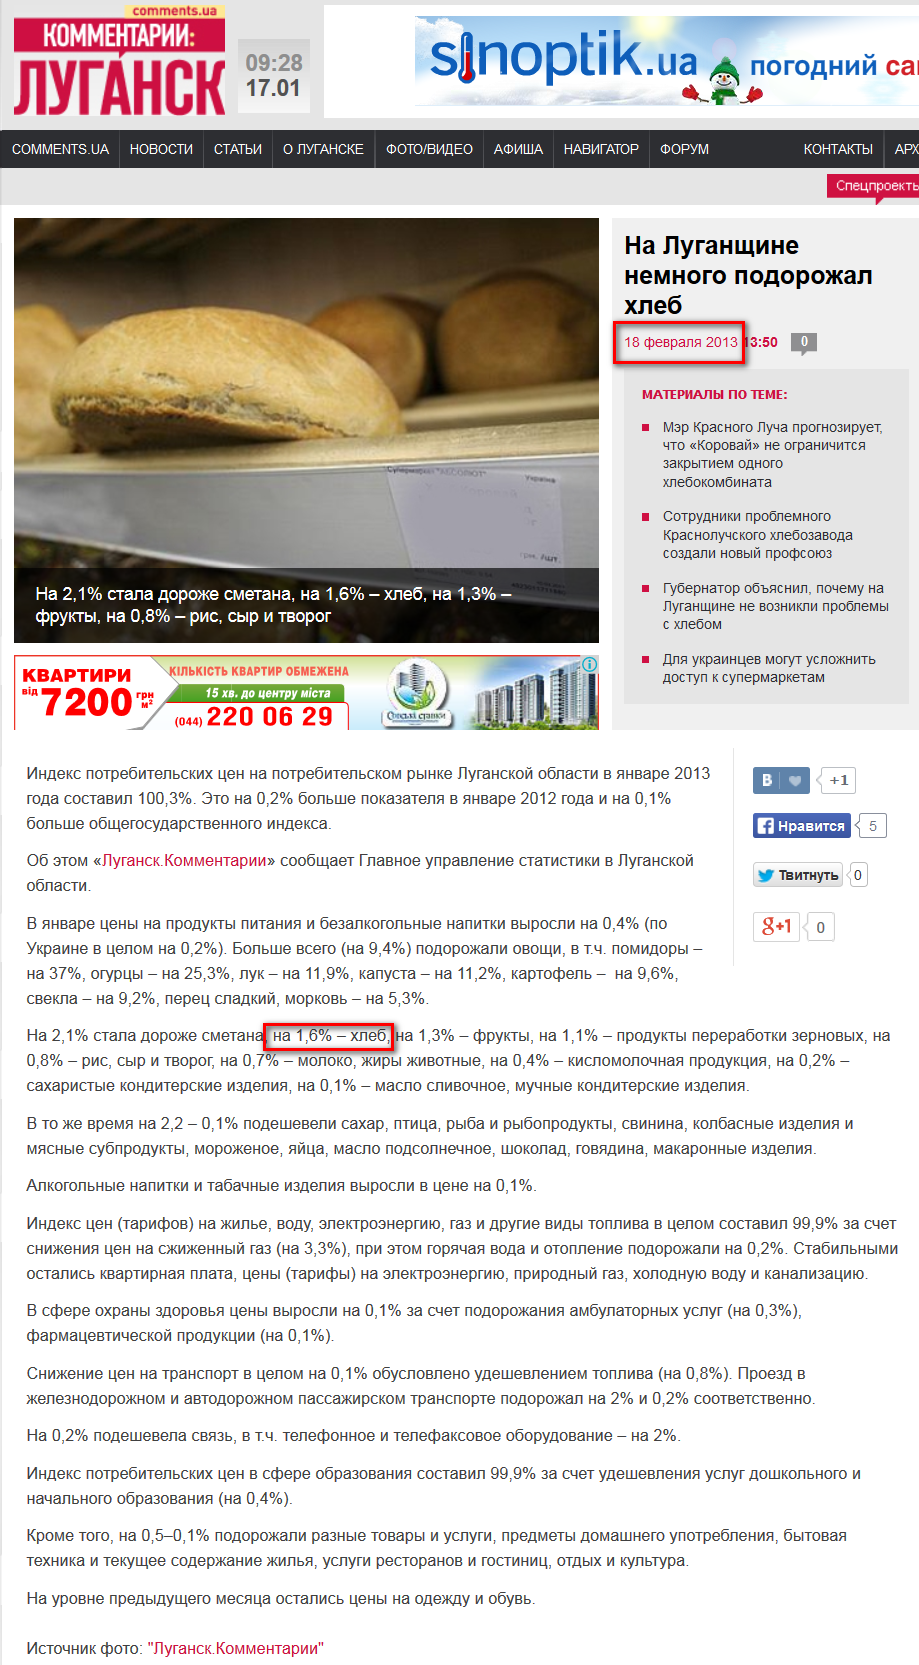 http://lugansk.comments.ua/news/2013/02/18/135005.html